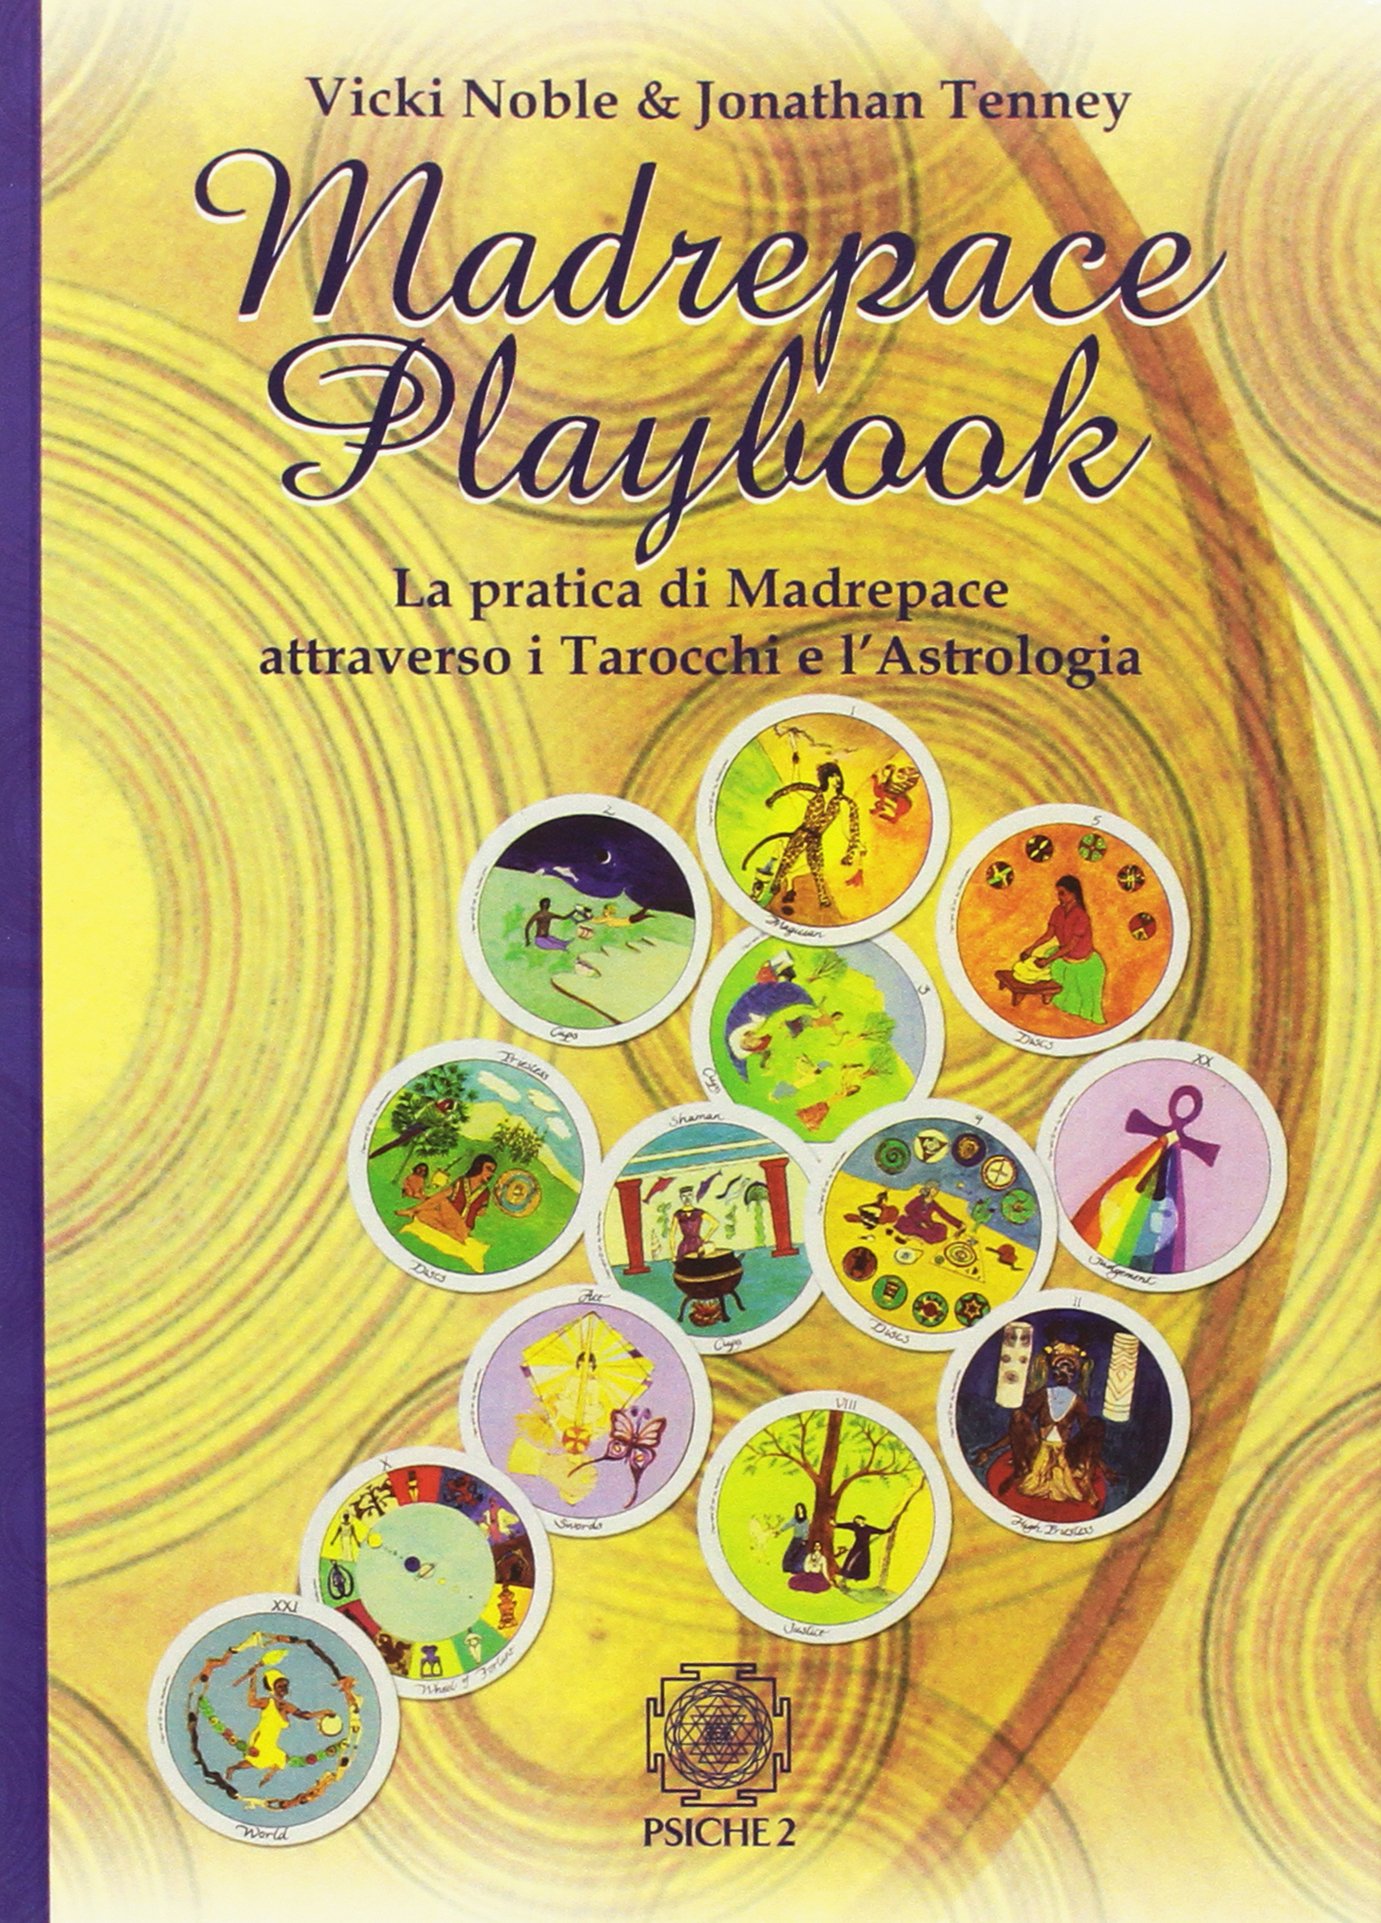 Madrepace Playbook - Vicki Noble & Jonathan Tenney